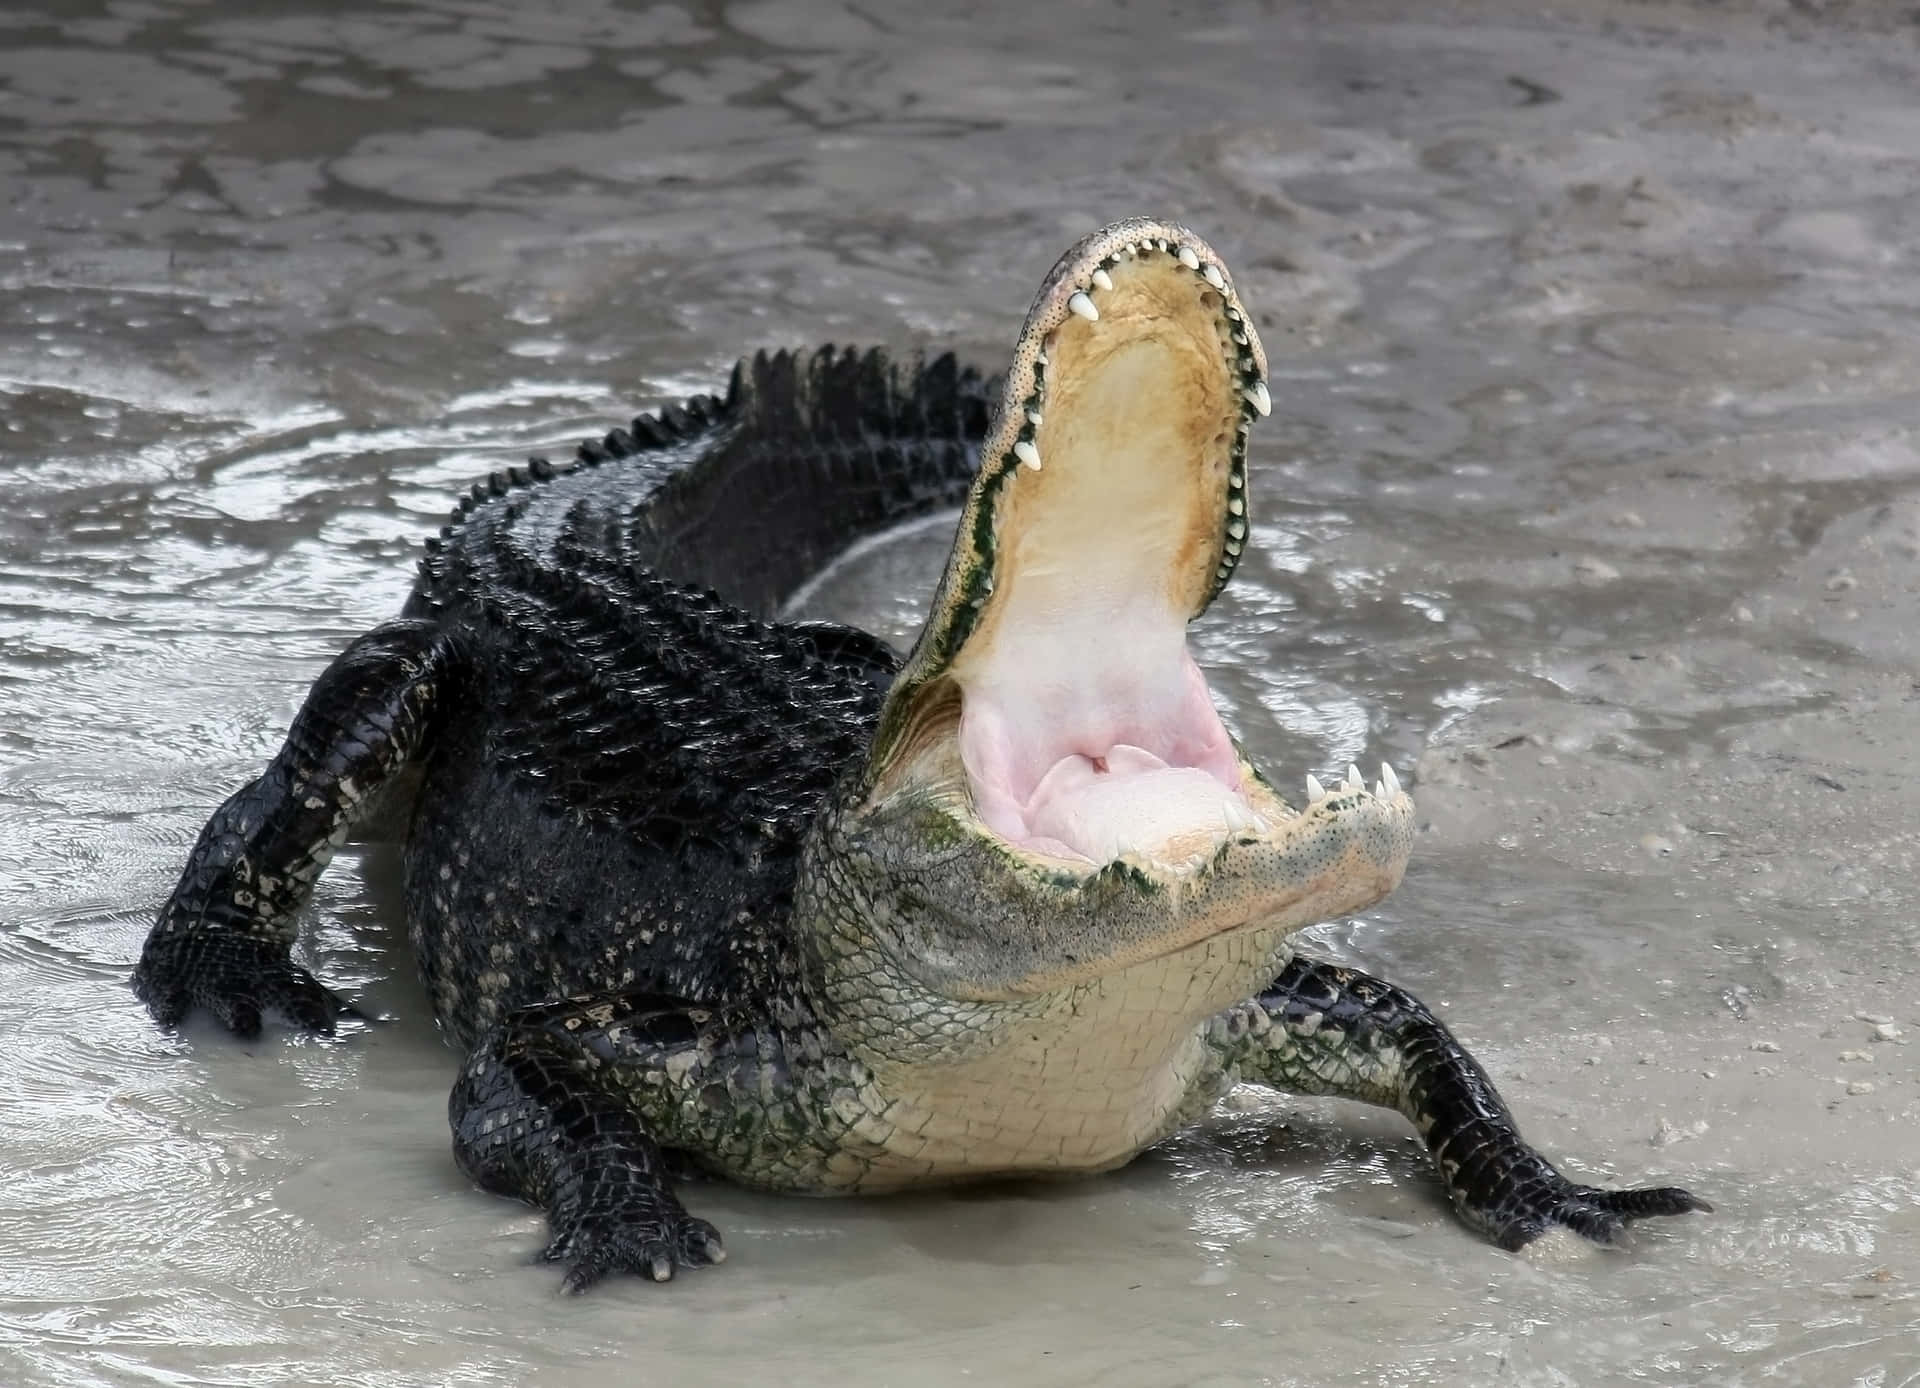 Alligator sunbathing in the Florida wetlands